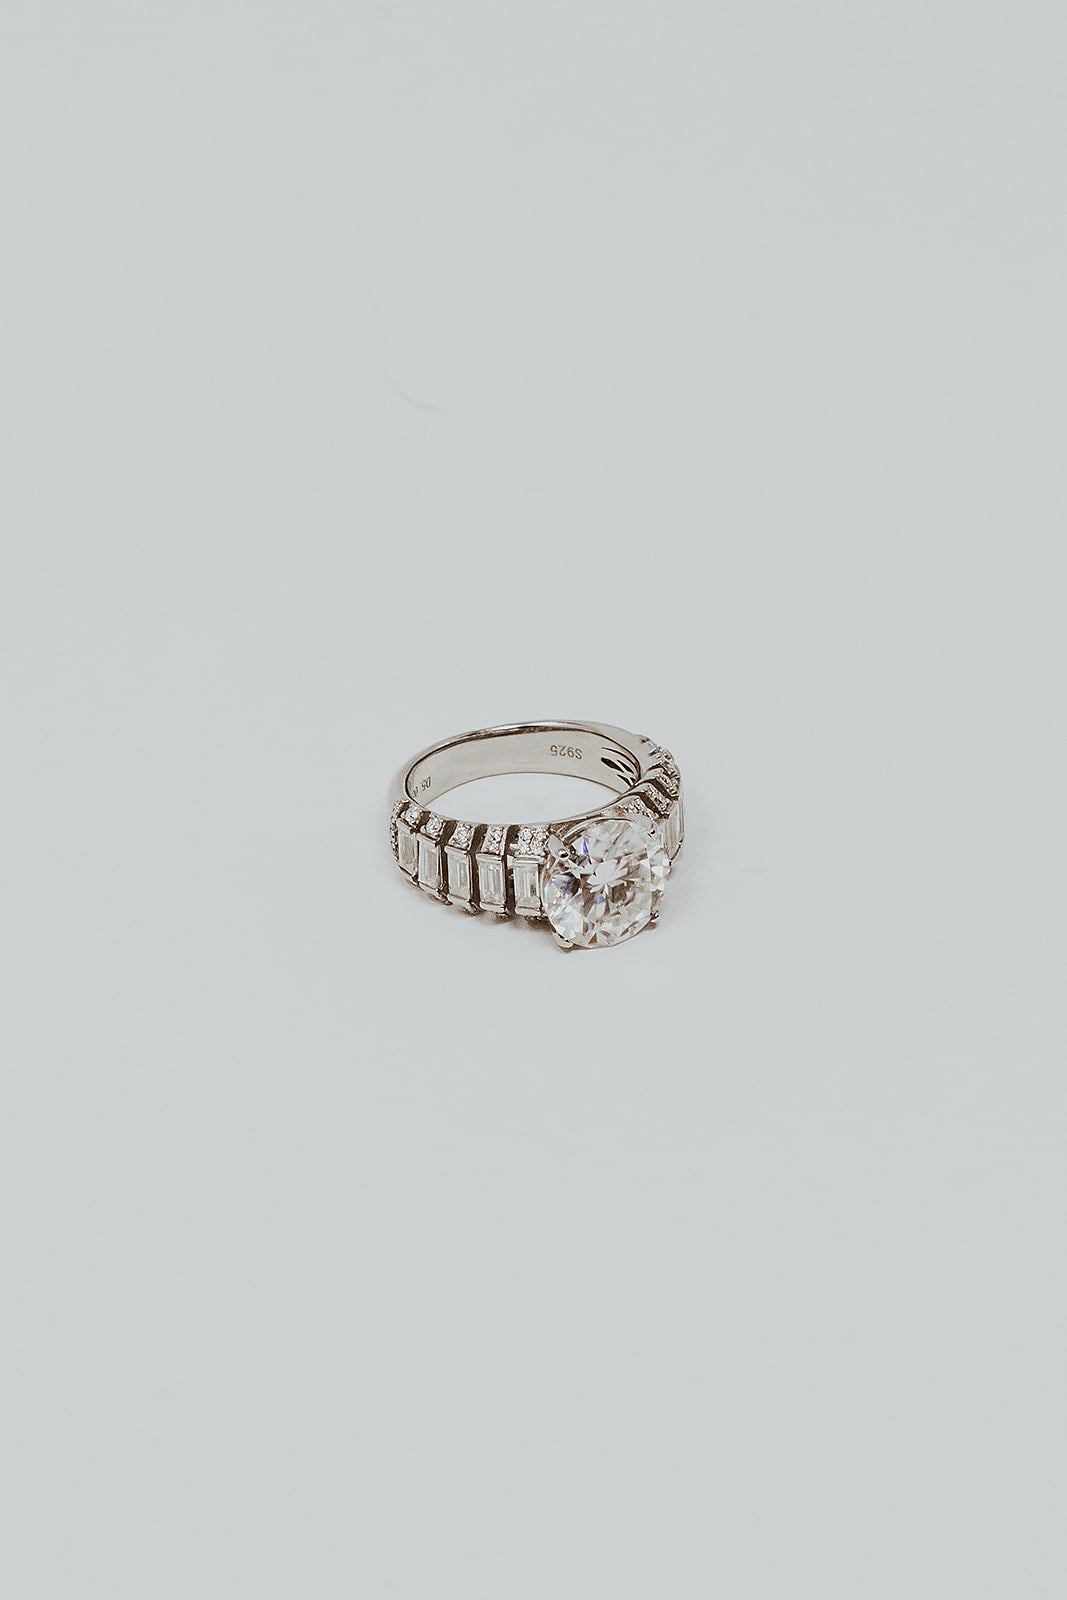 Royale .925 Sterling Silver 5 Carat Moissanite Ring